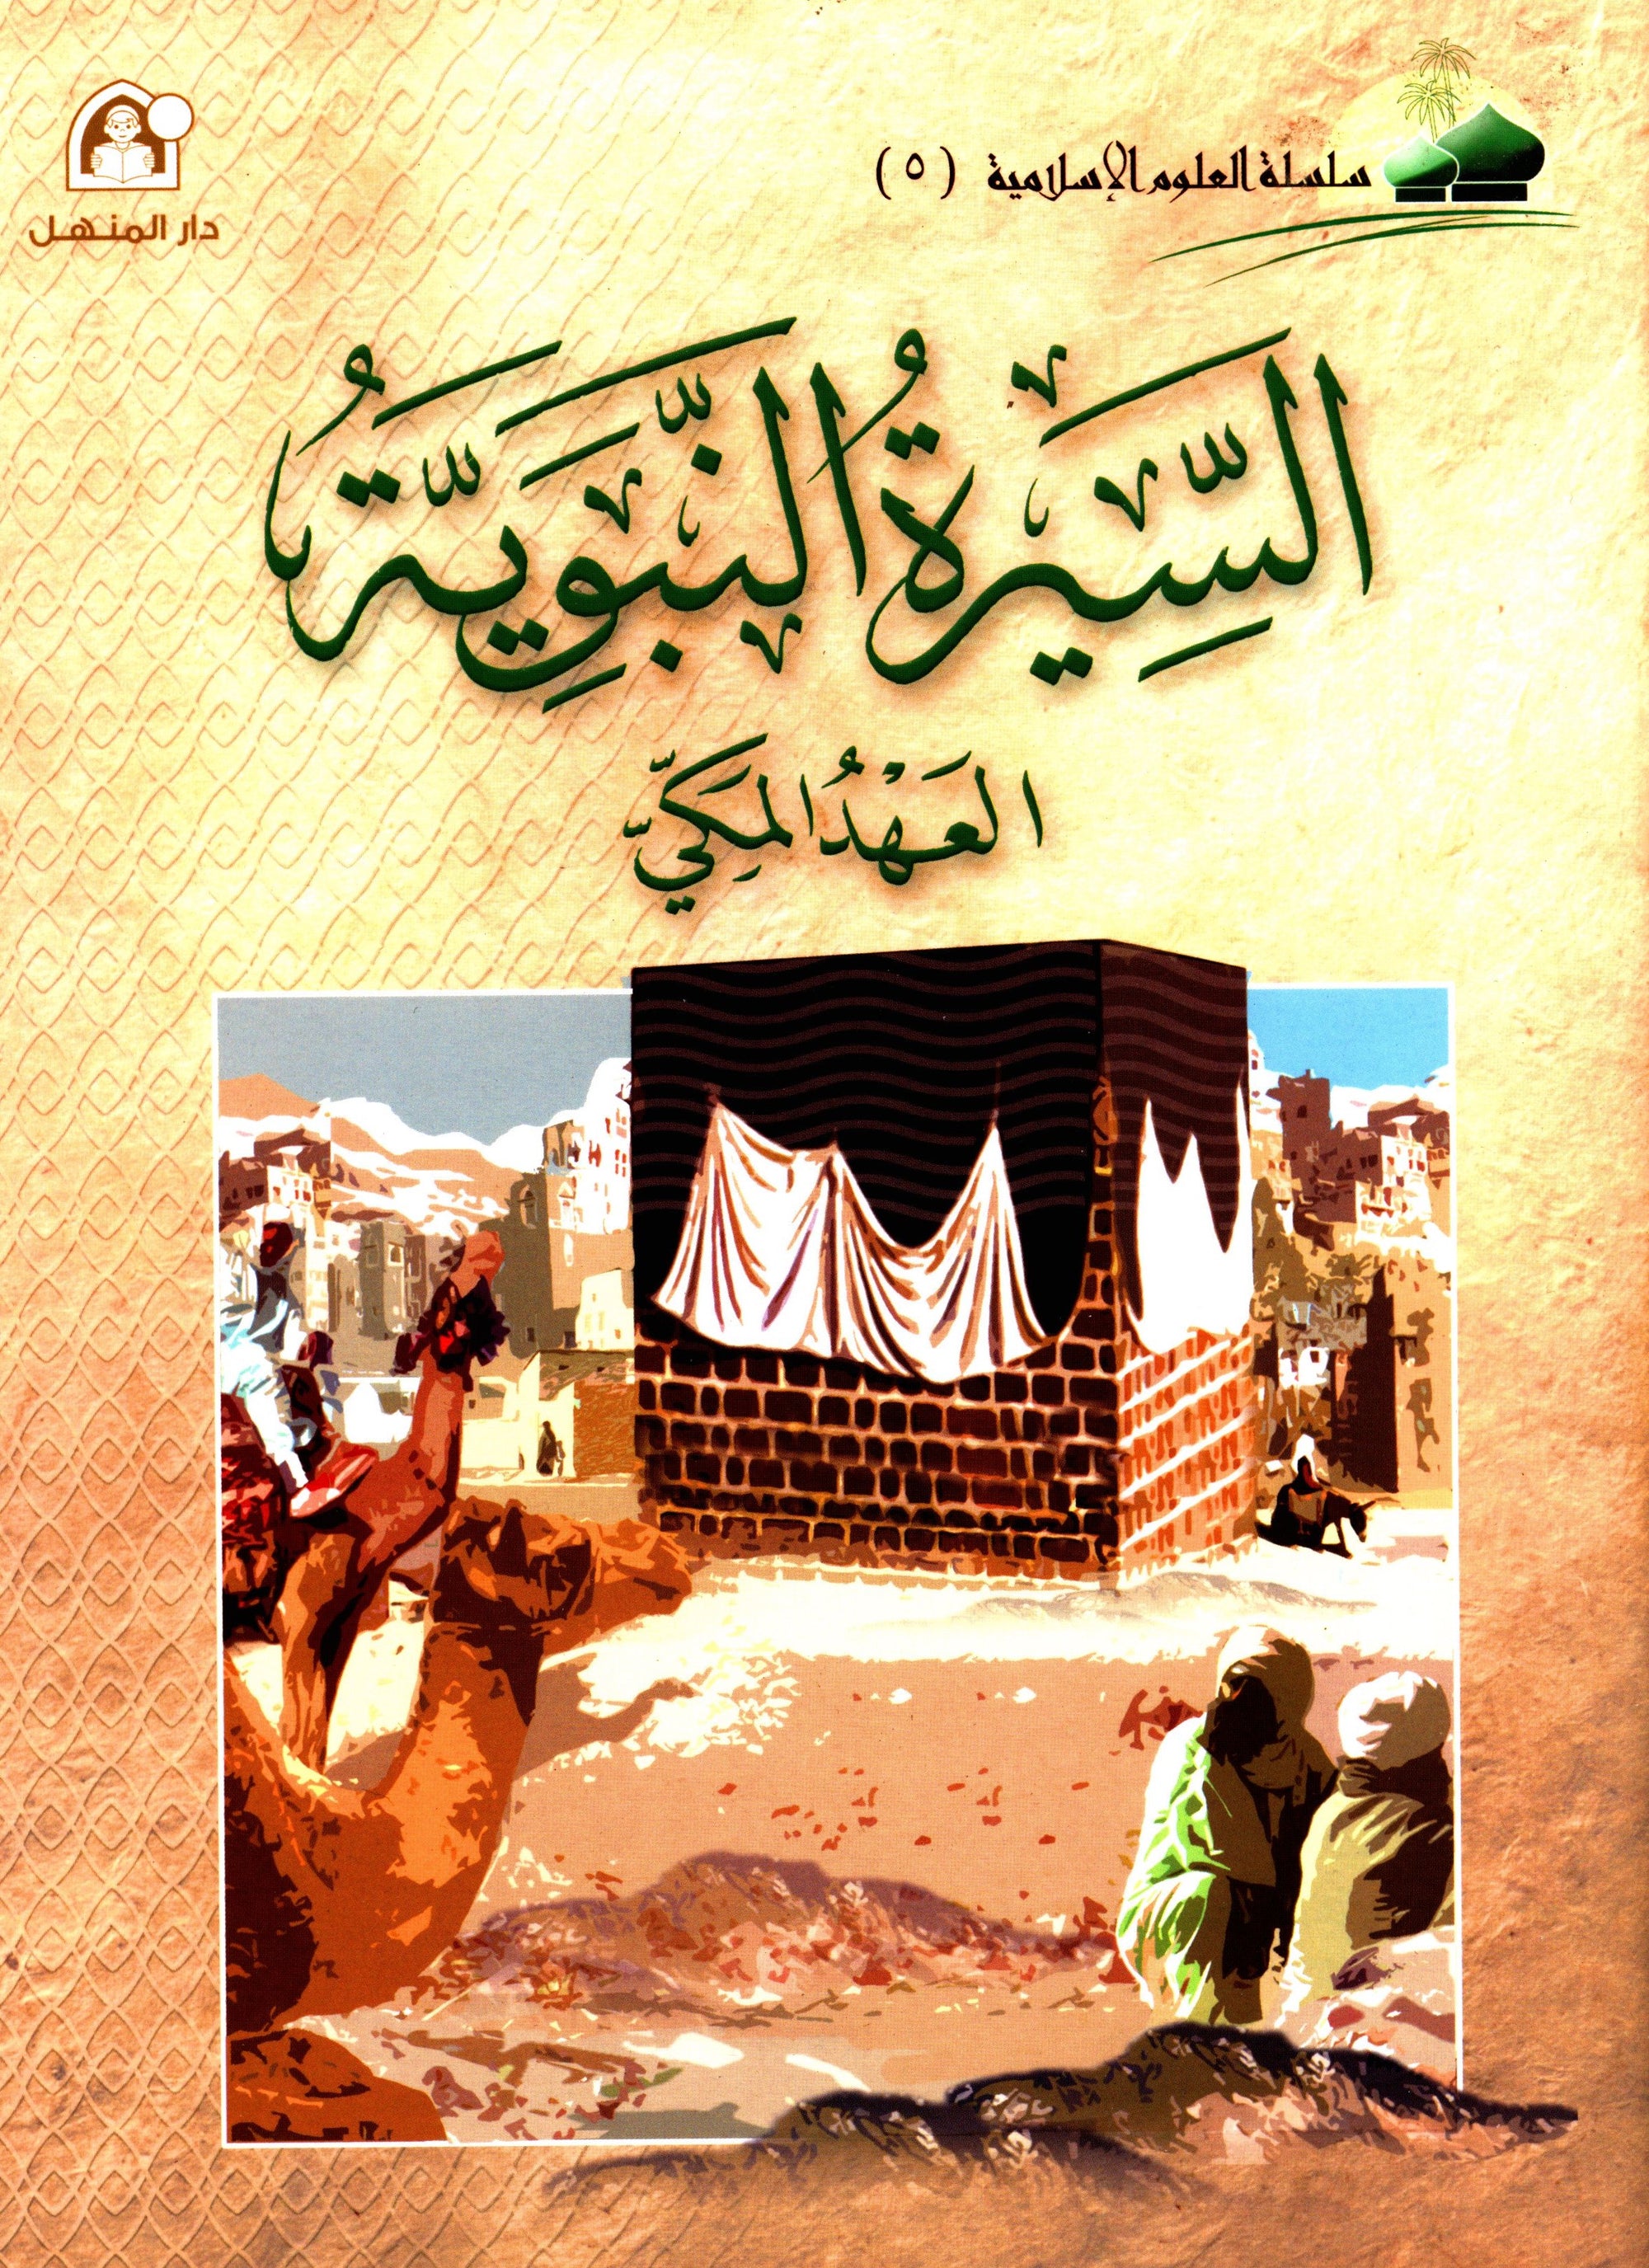 Islamic Knowledge Series - Biography of the Prophet Life in Makka سلسلة العلوم الإسلامية السيرة النبوية العهد المكي